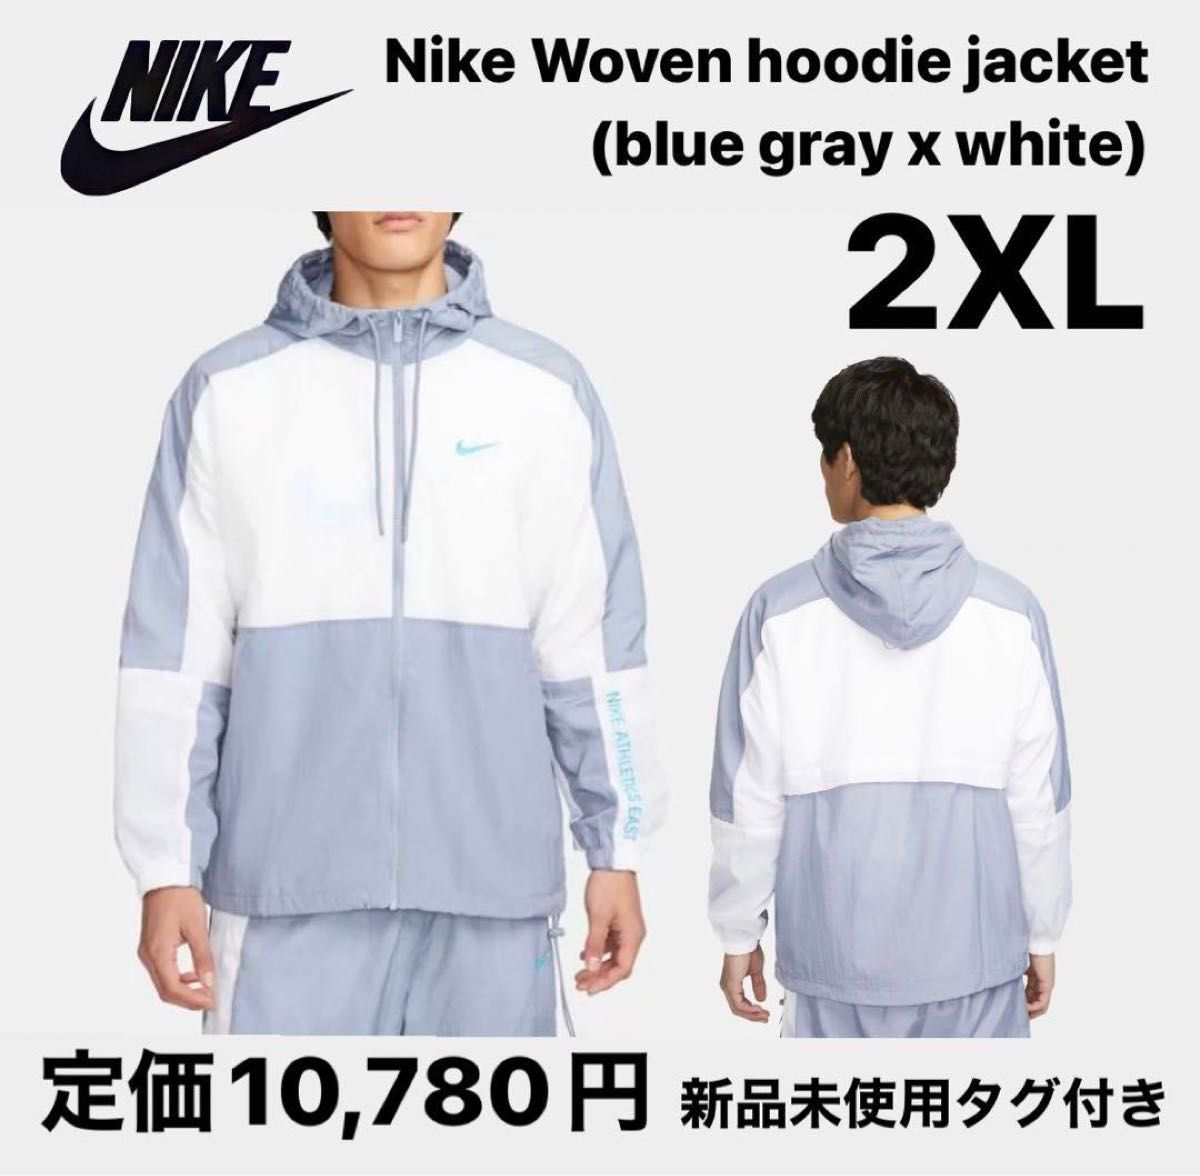 Nike Woven hoodie jacket blue gray white